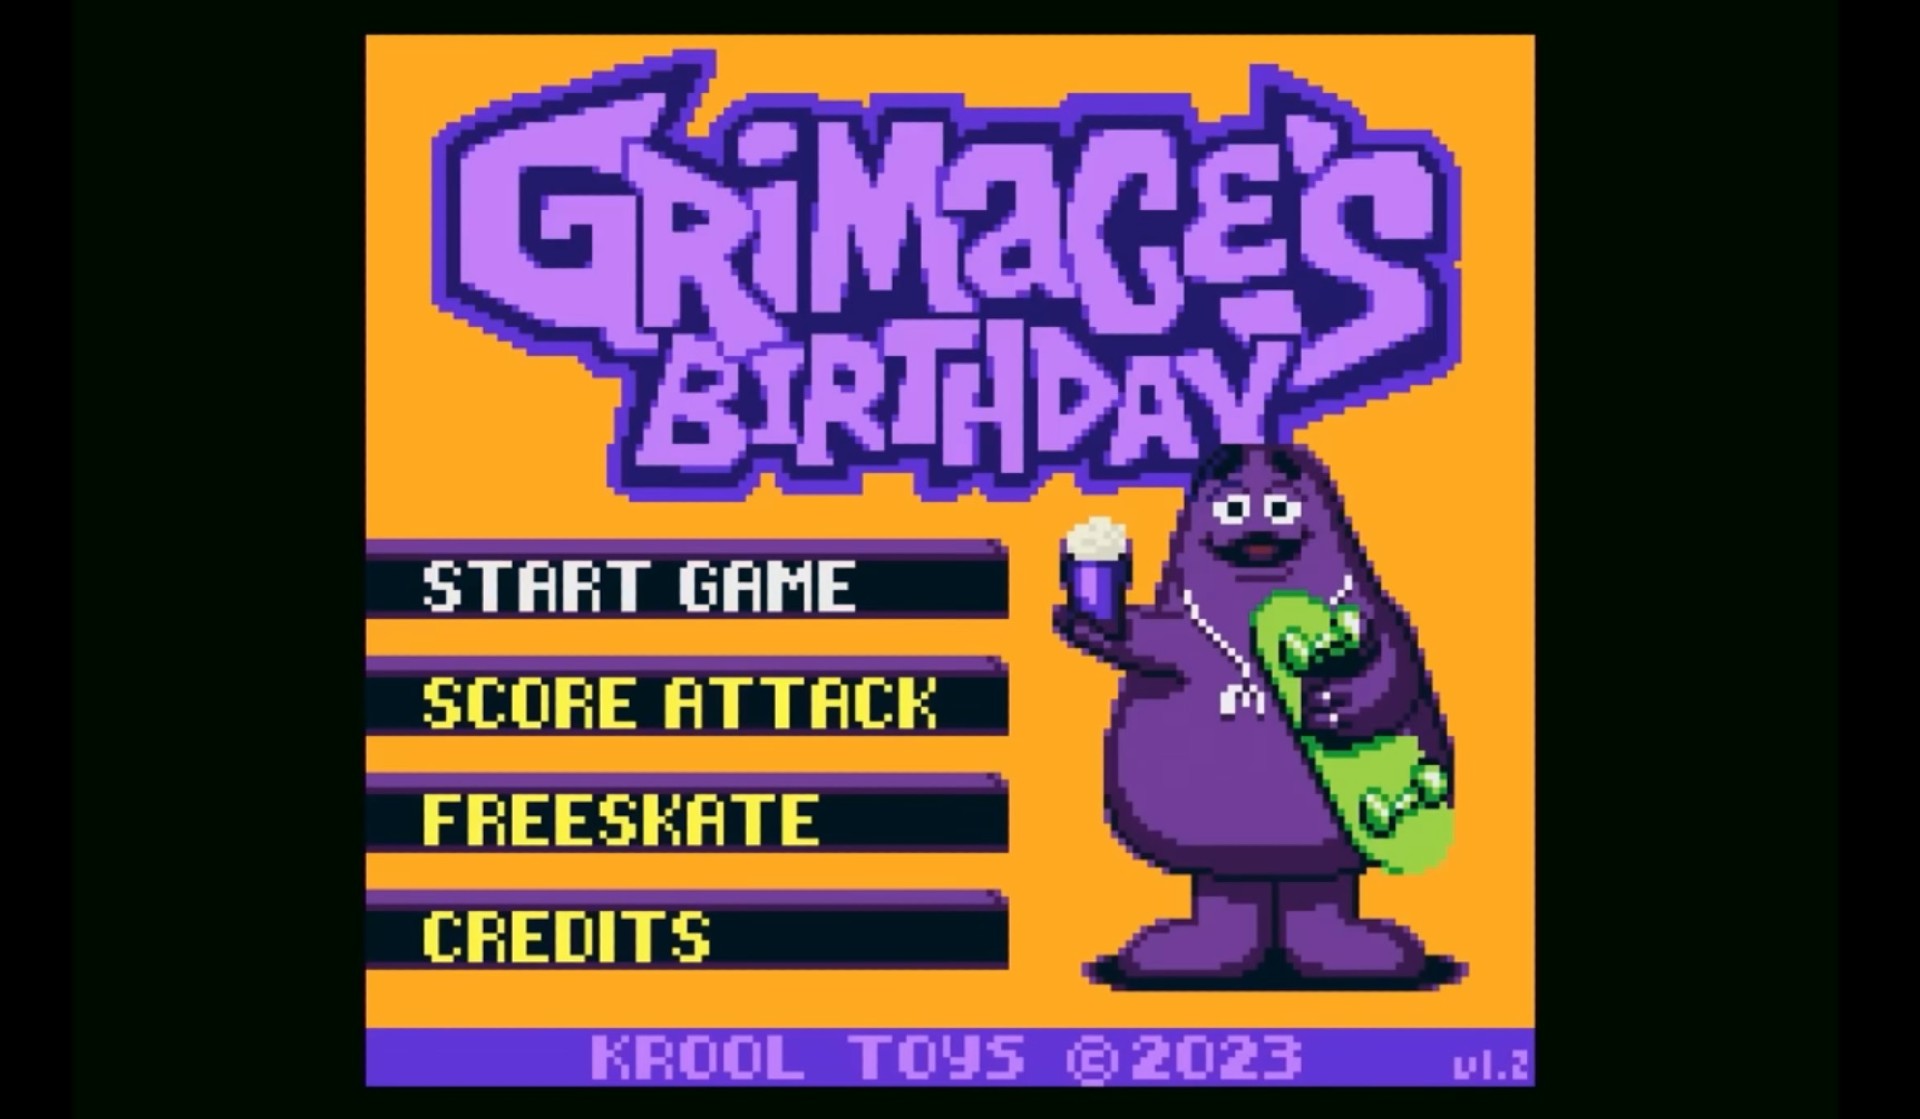 McDonald ปล่อยเกม Grimace’s Birthday ให้เล่นฟรี เพื่อเฉลิมฉลองวันเกิด Grimace